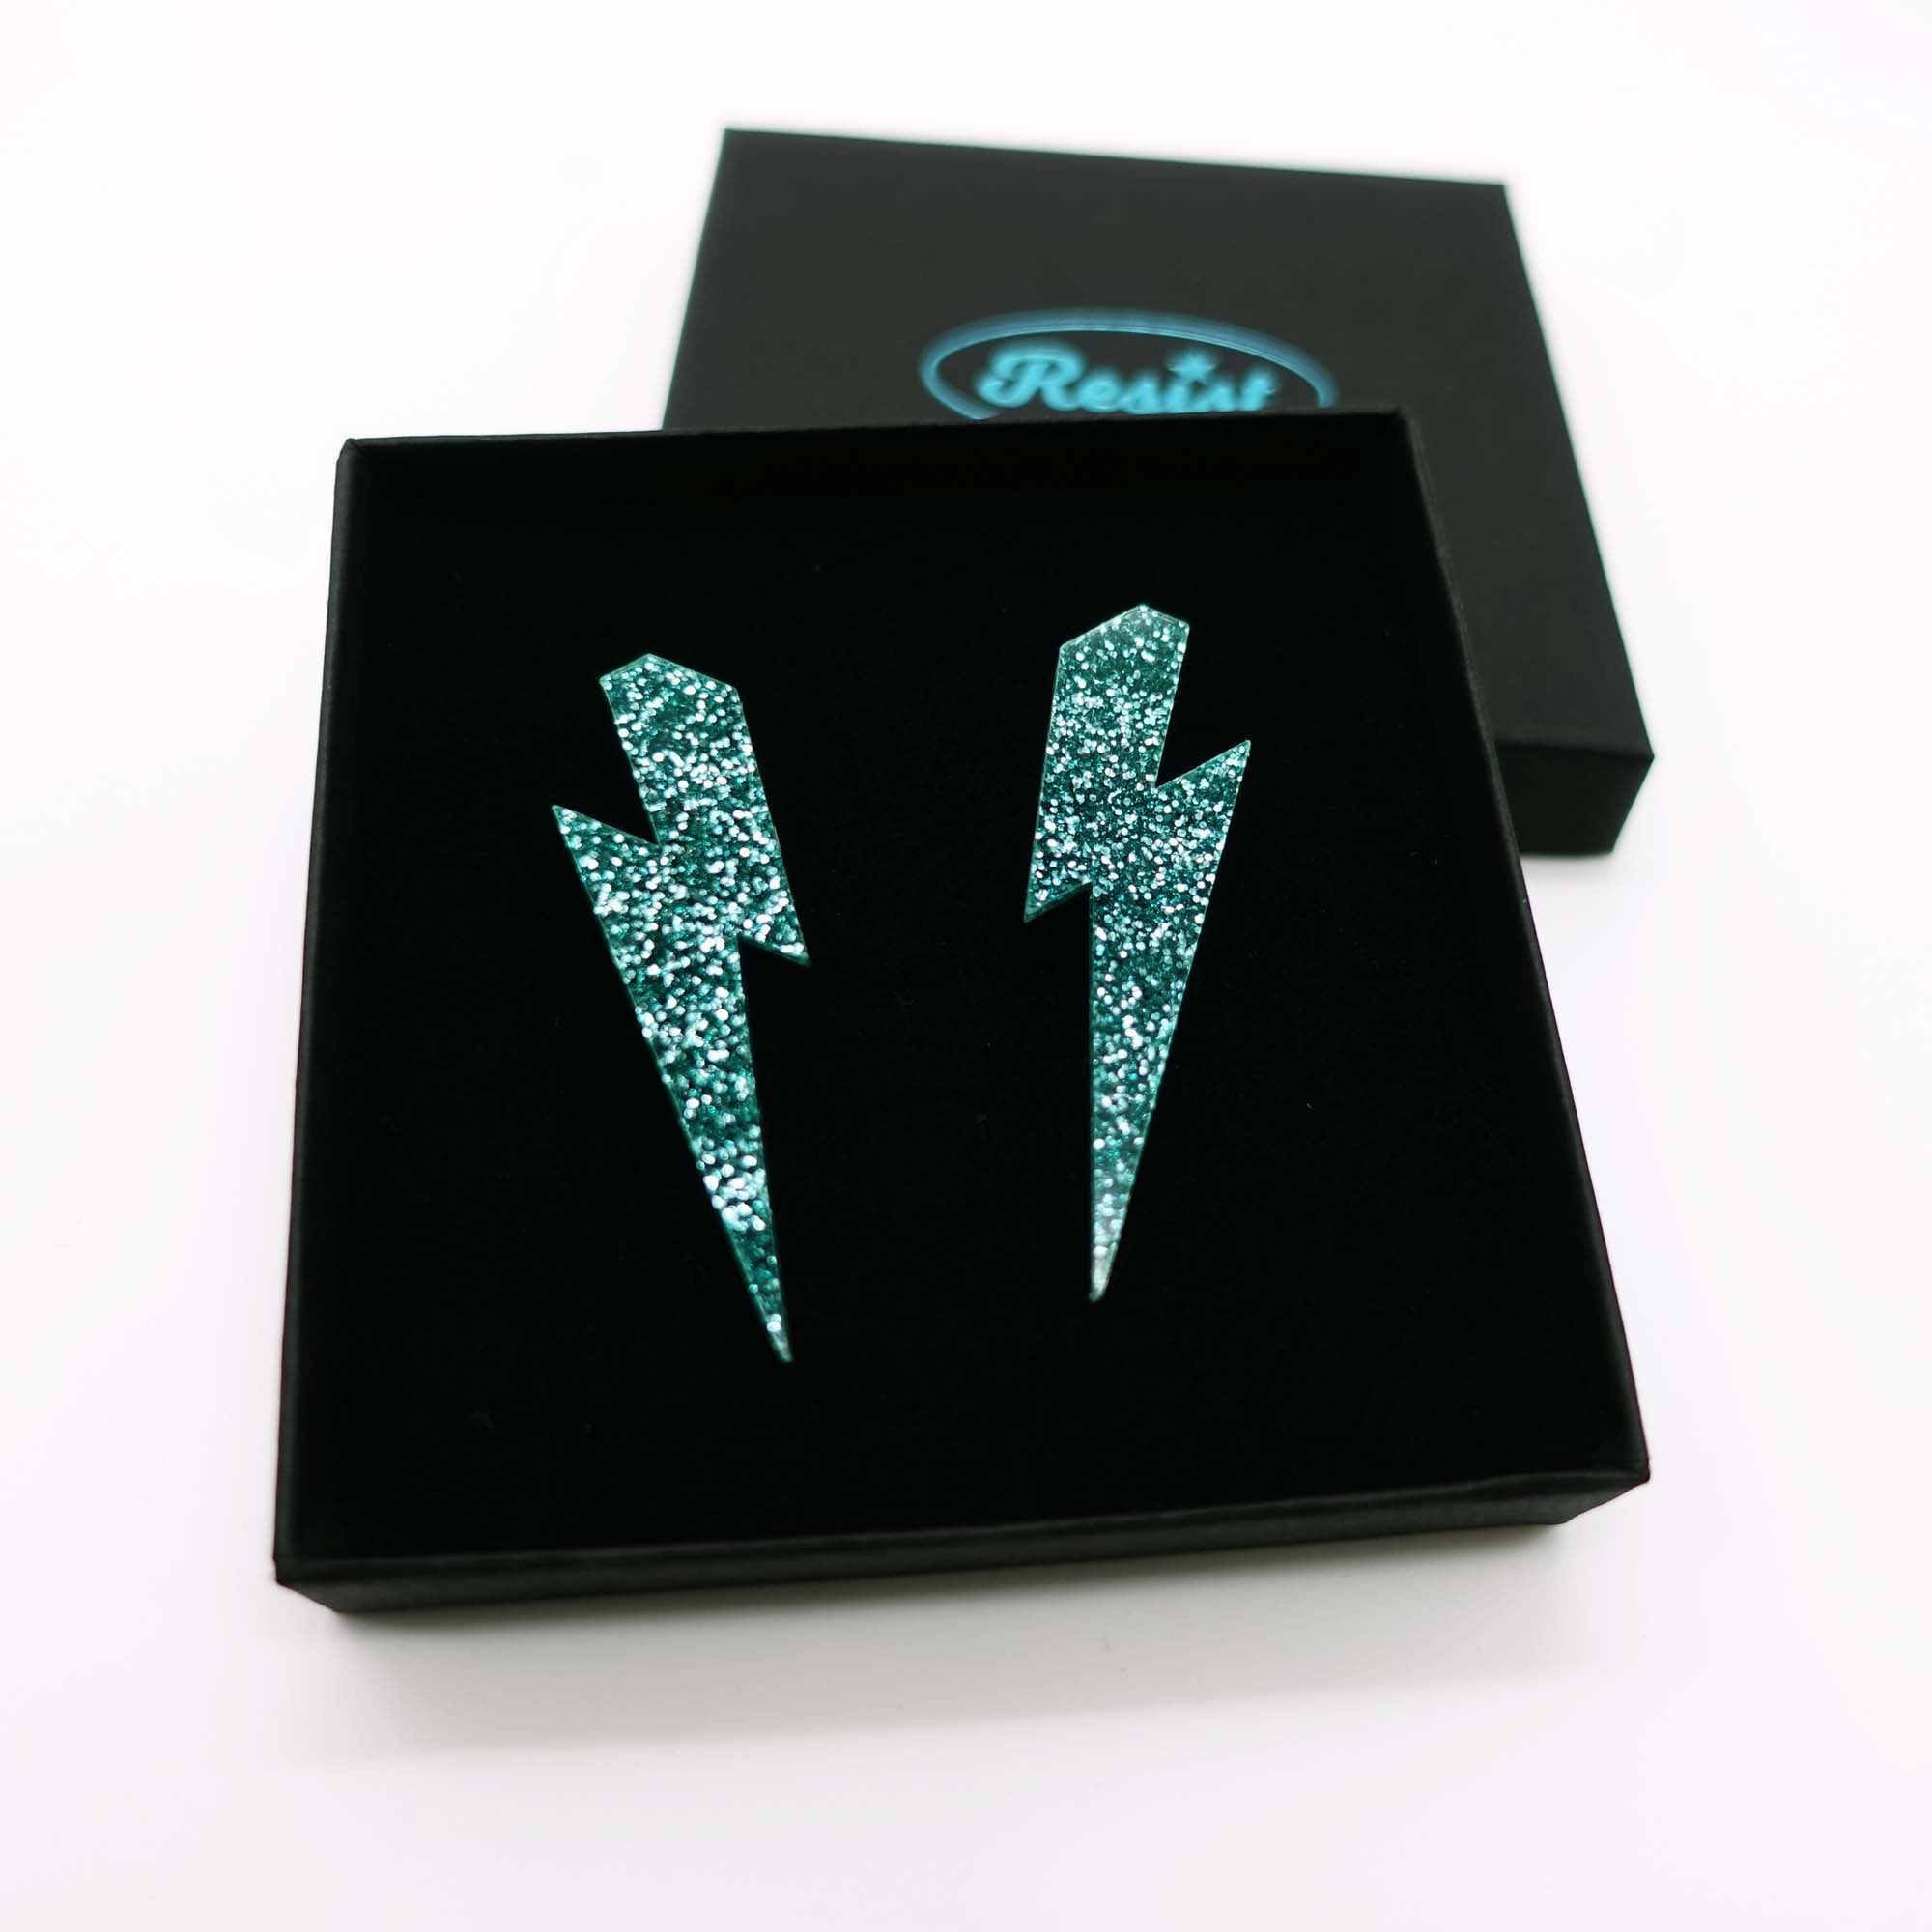 Teal glitter Lightning Bolt earrings designed by Sarah Day for Wear and Resist. 